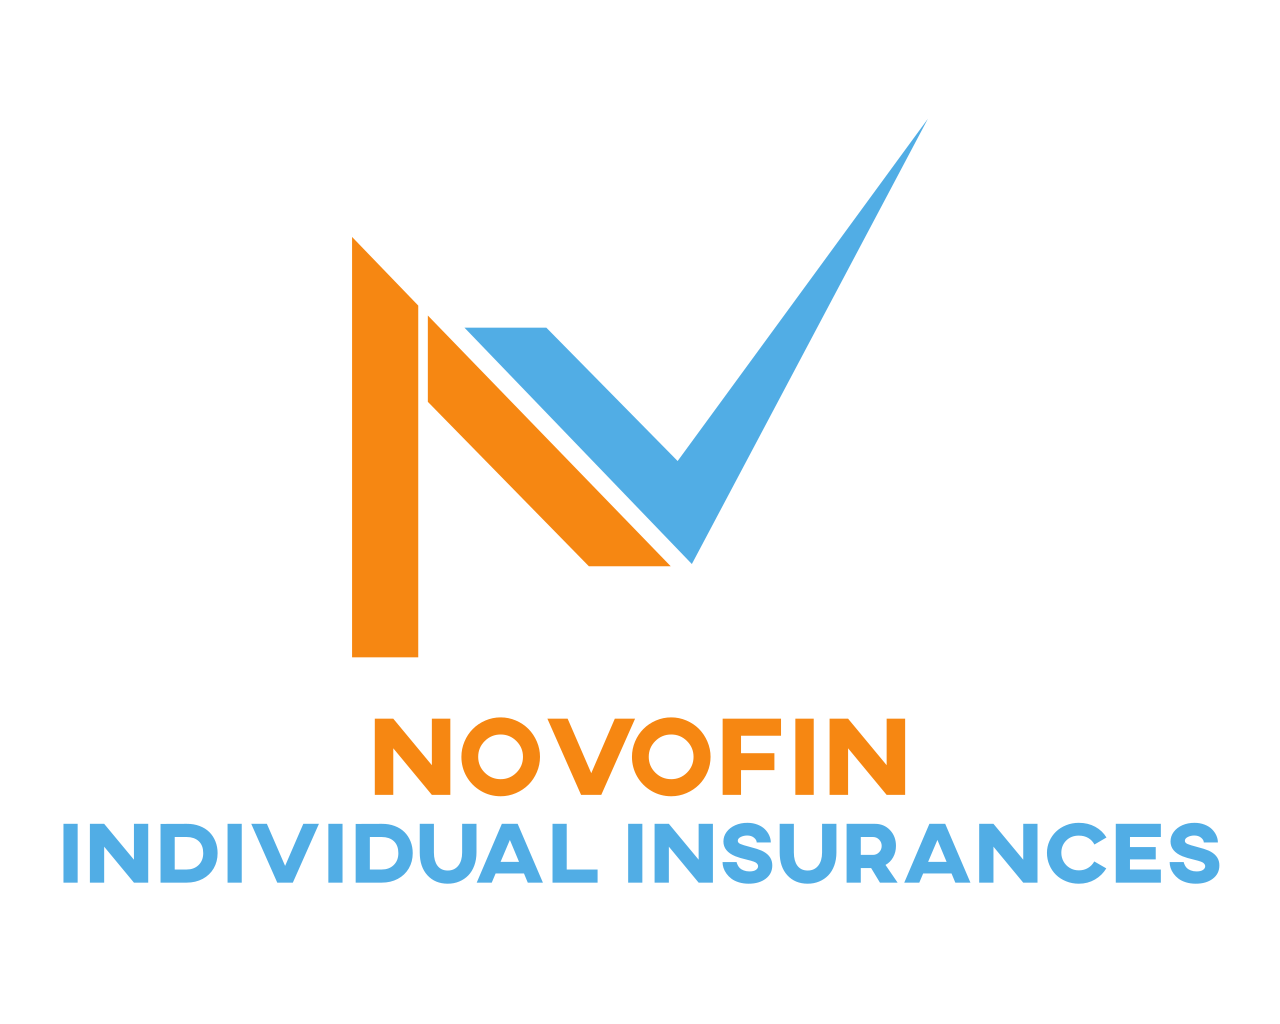 NOVOFIN Insurance - individual solutions